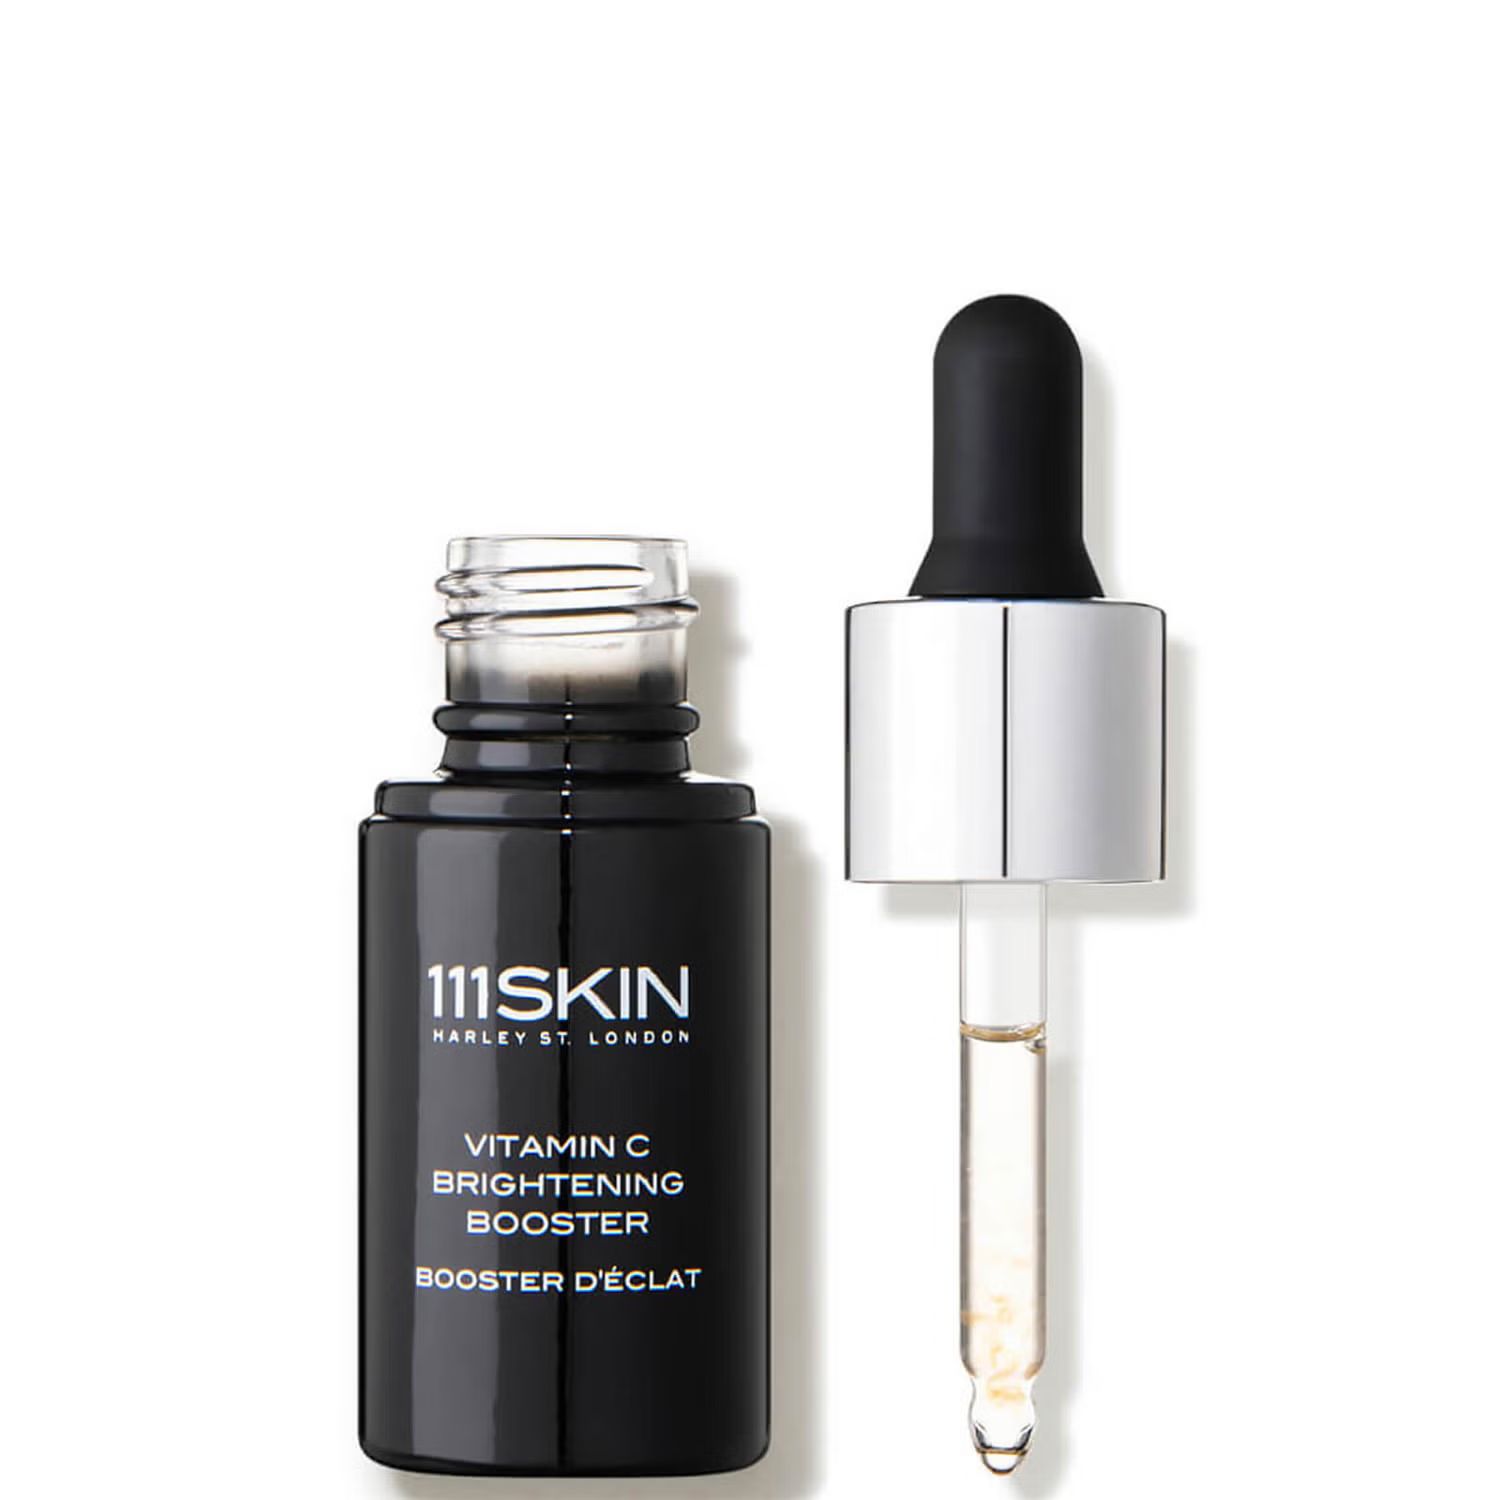 111SKIN Vitamin C Brightening Booster 0.68 oz | Skinstore